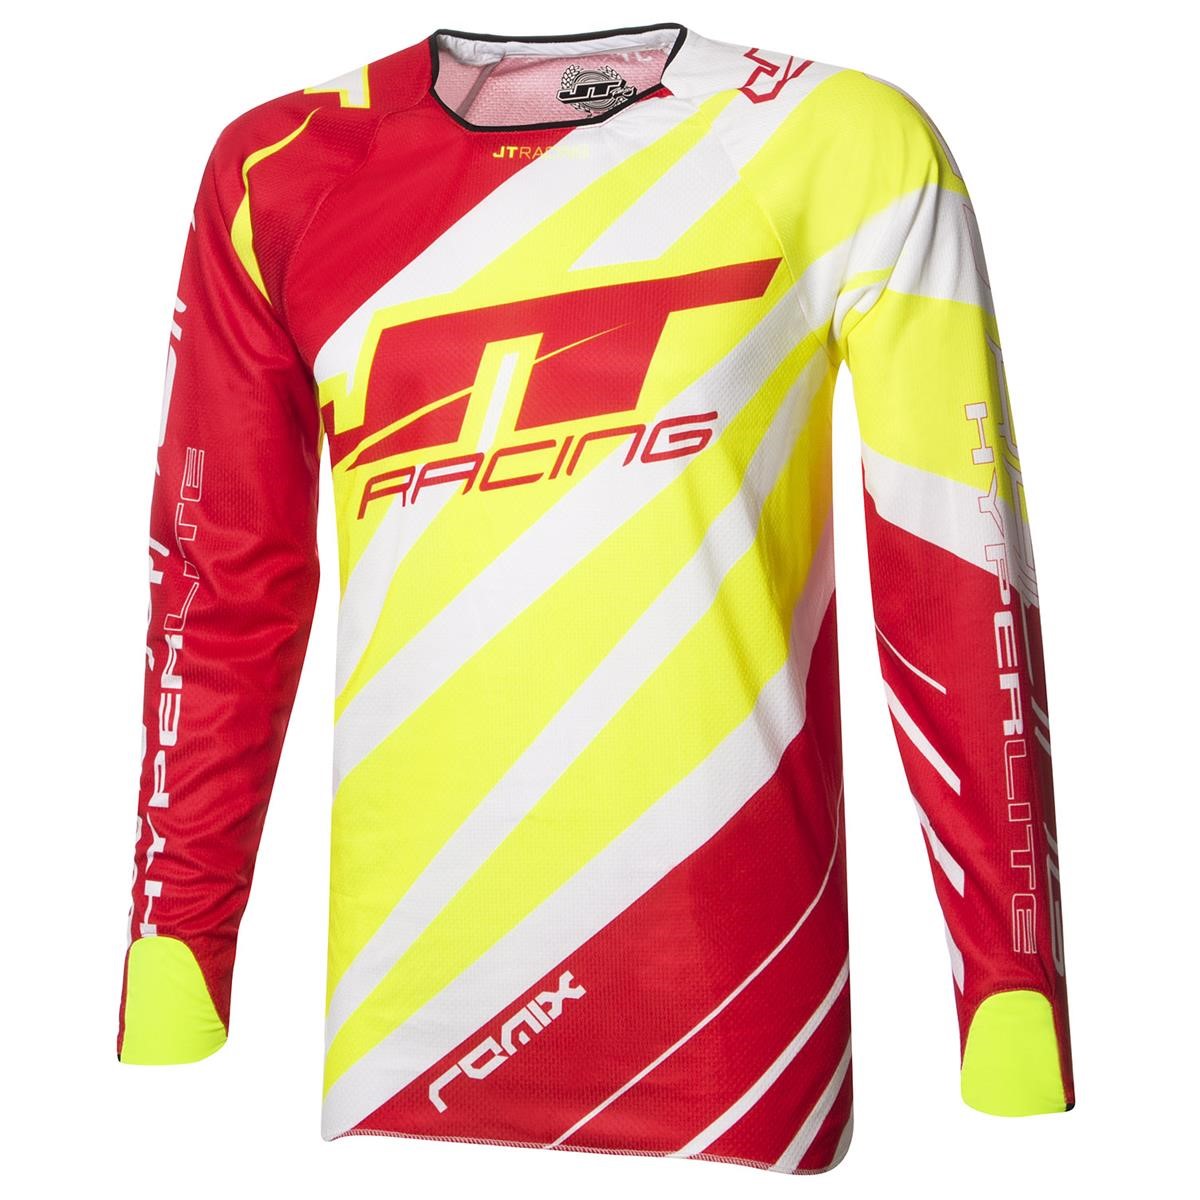 JT Racing USA Jersey HyperLite Remix Red/Neon Yellow/White